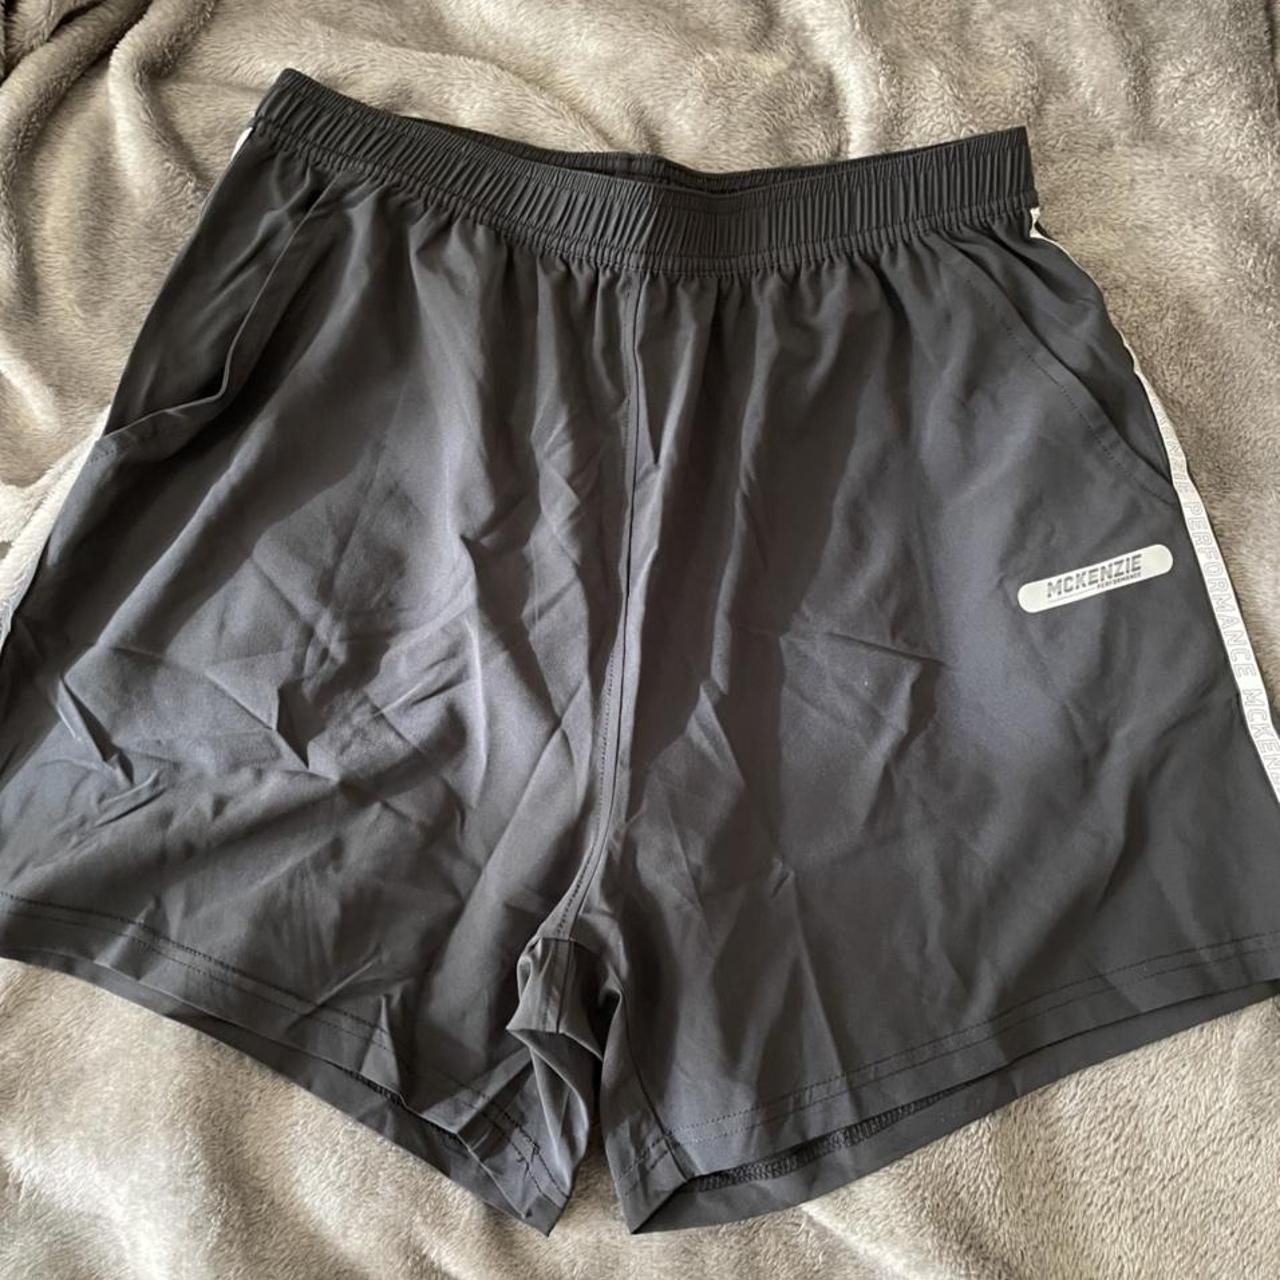 McKenzie Performance black sports shorts Condition:... - Depop